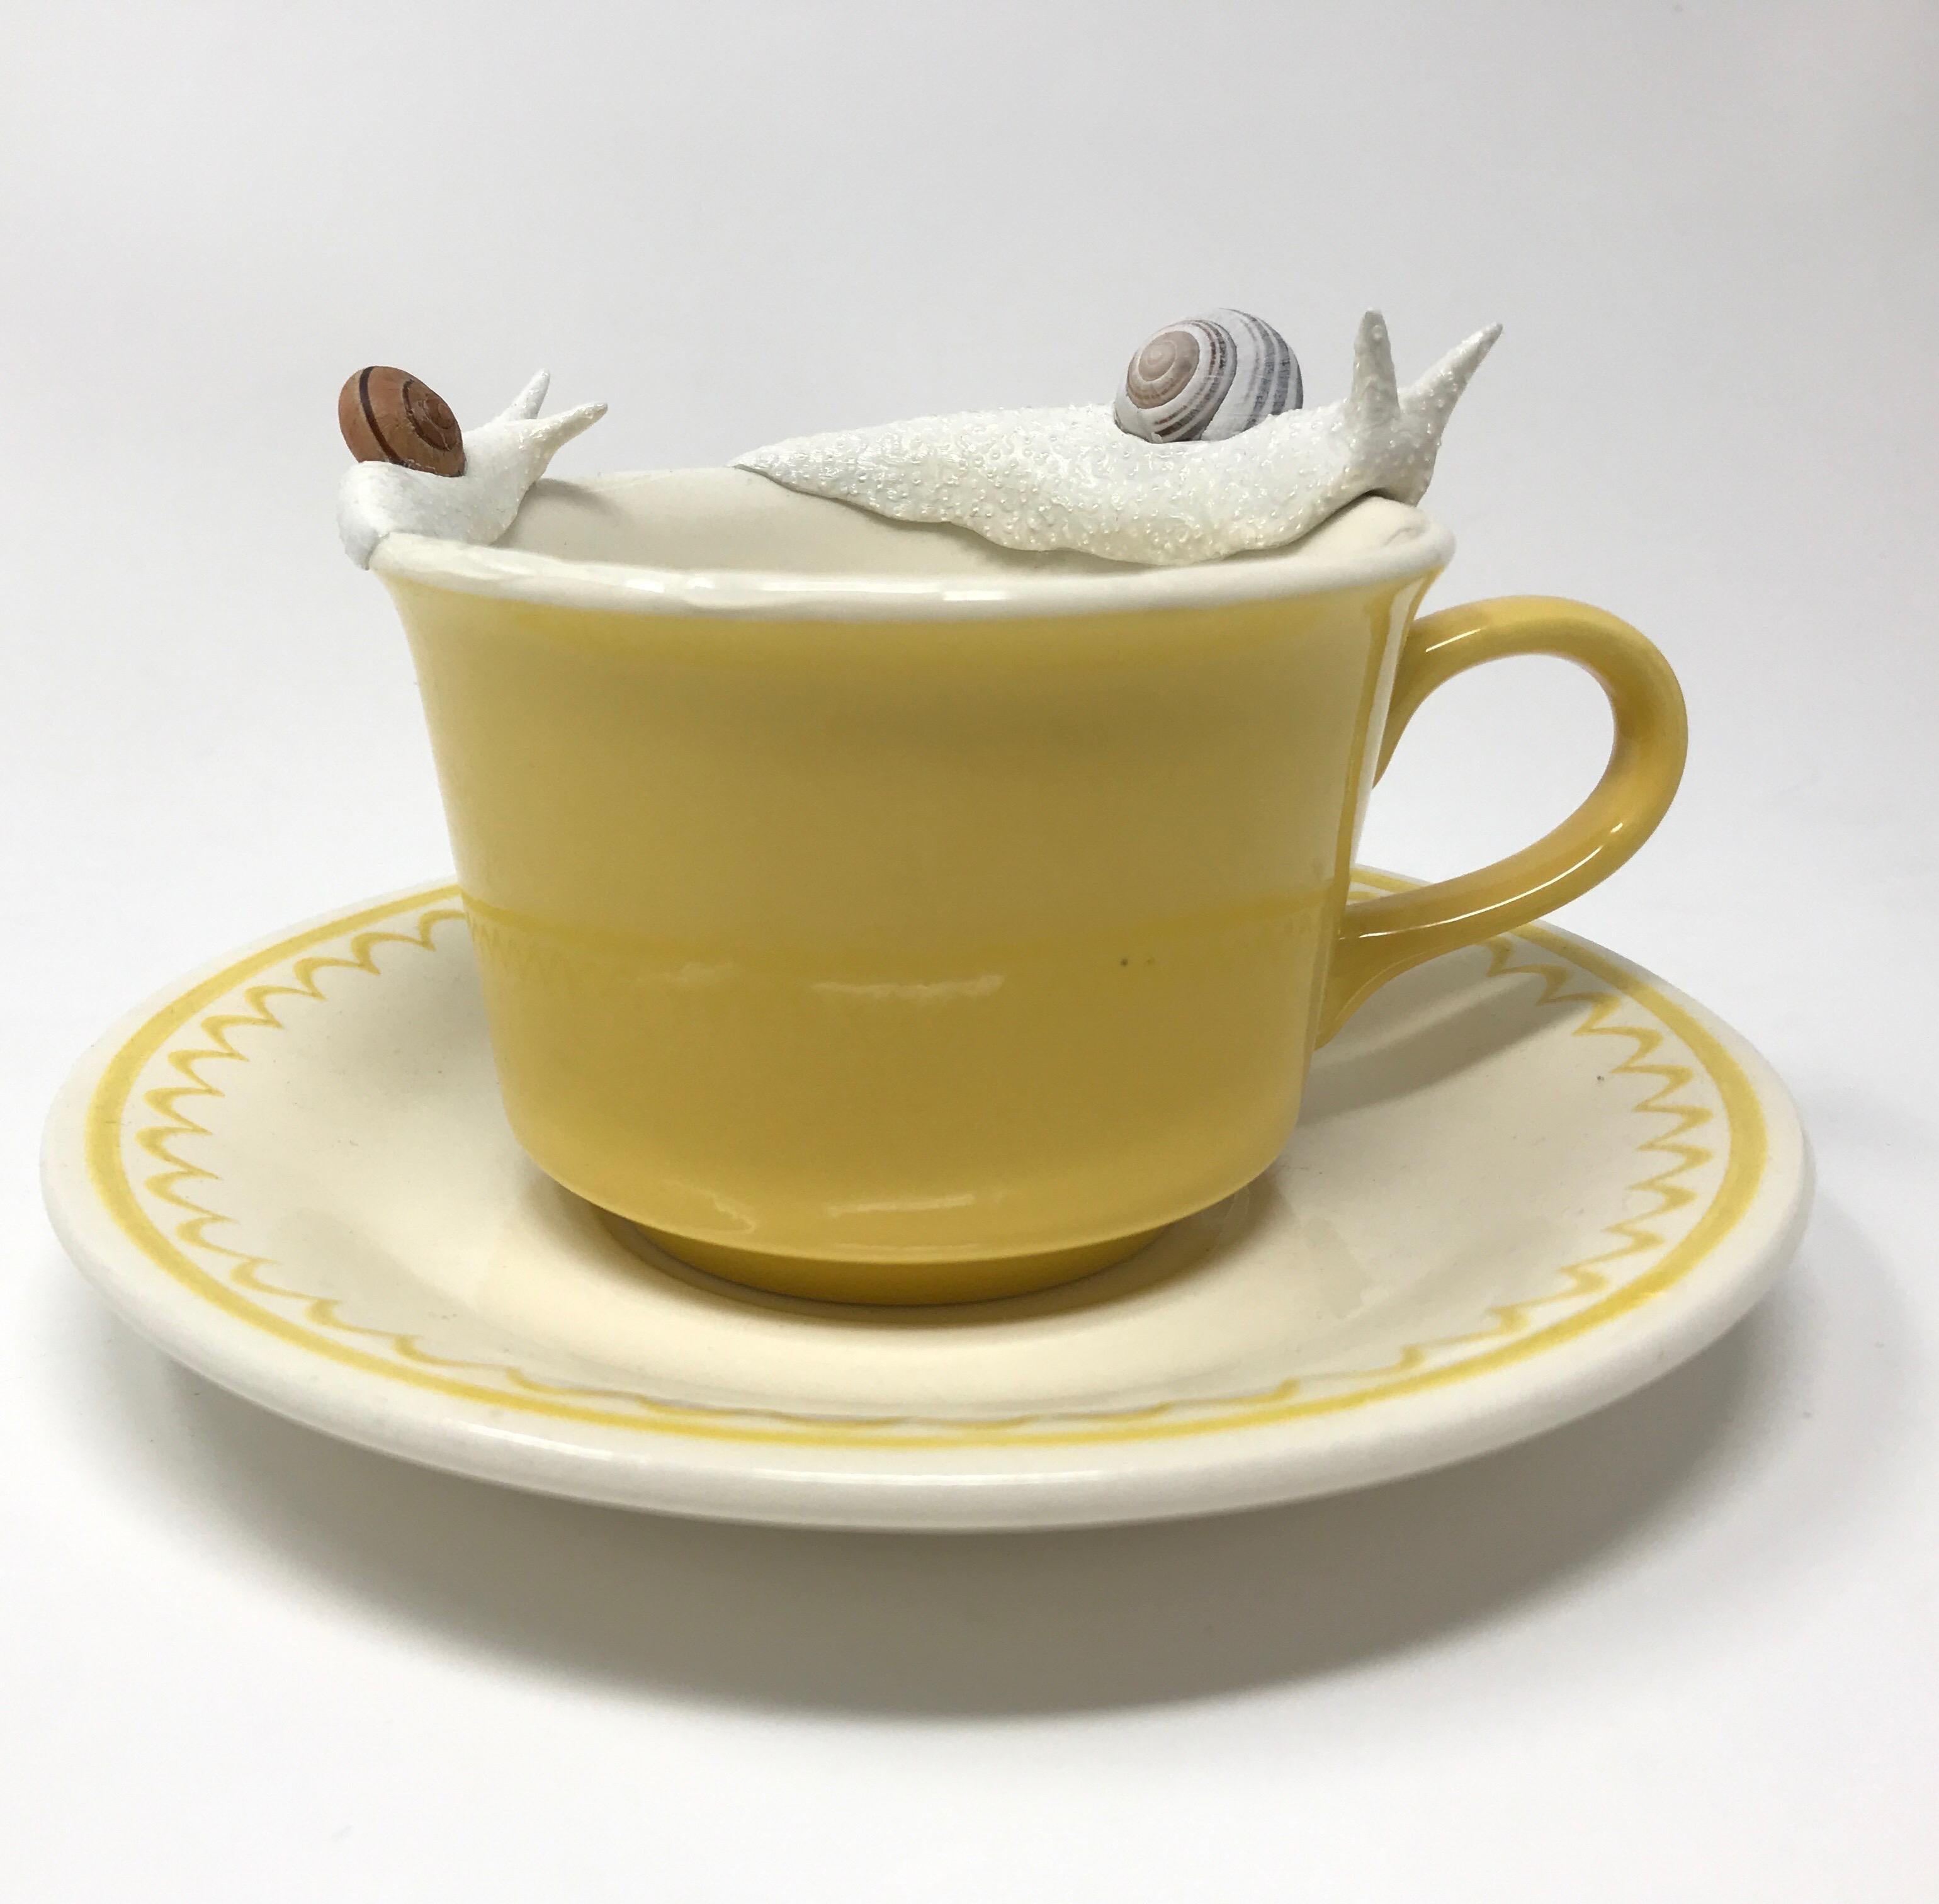 Snails on a yellow mug "Traversing Yellow" by Bethany Krull